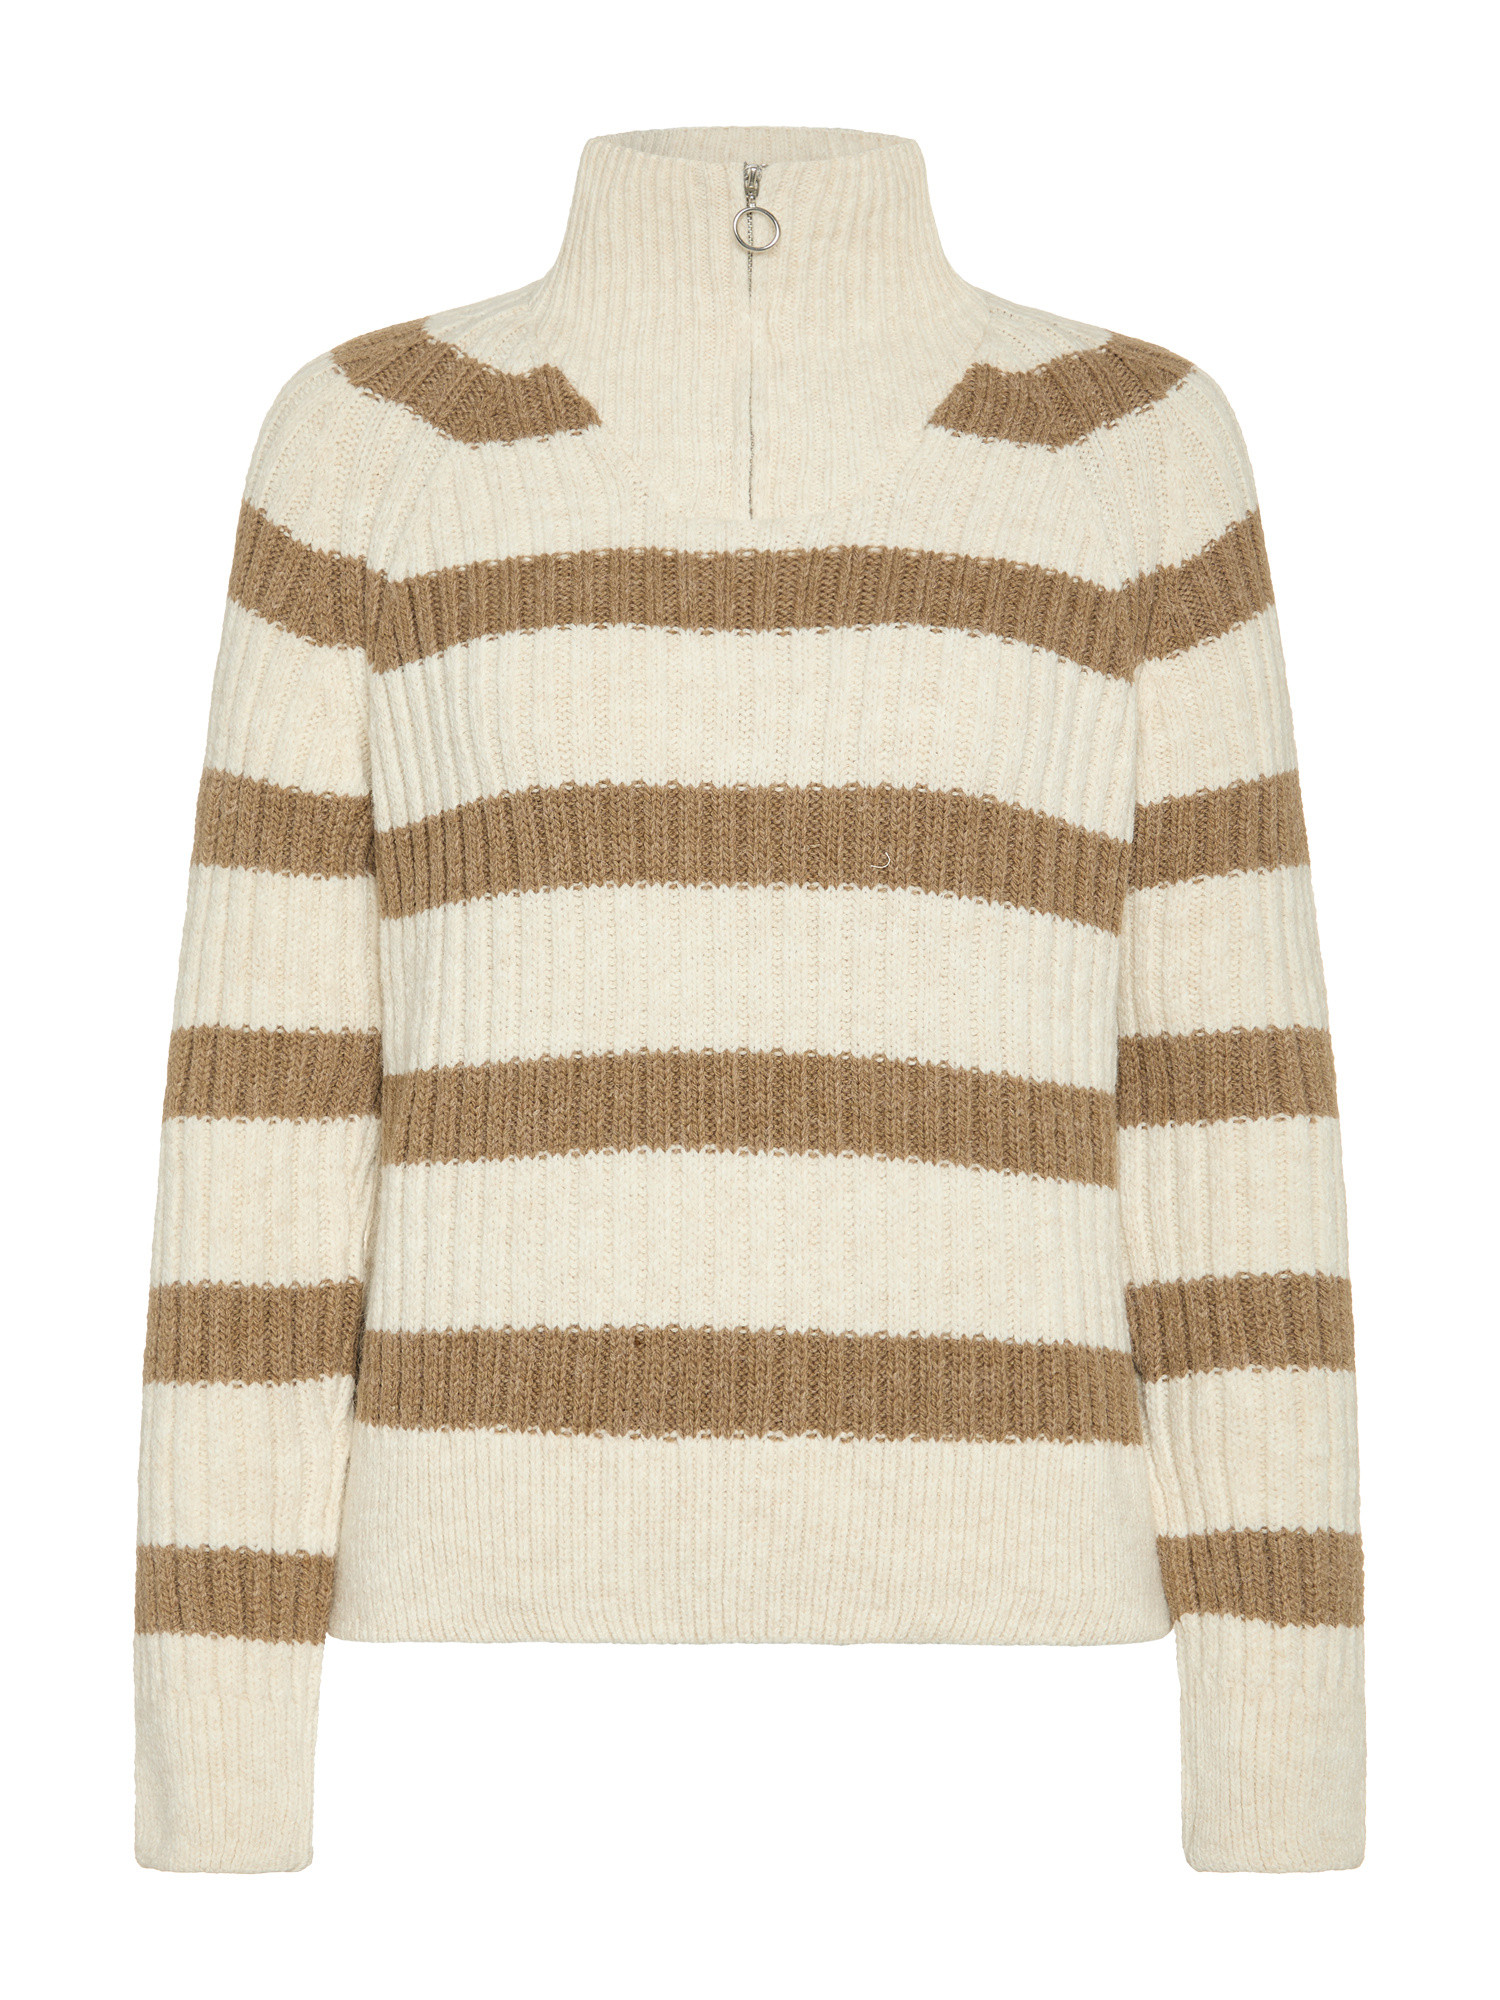 Only - Striped half-zip pullover, Beige, large image number 0